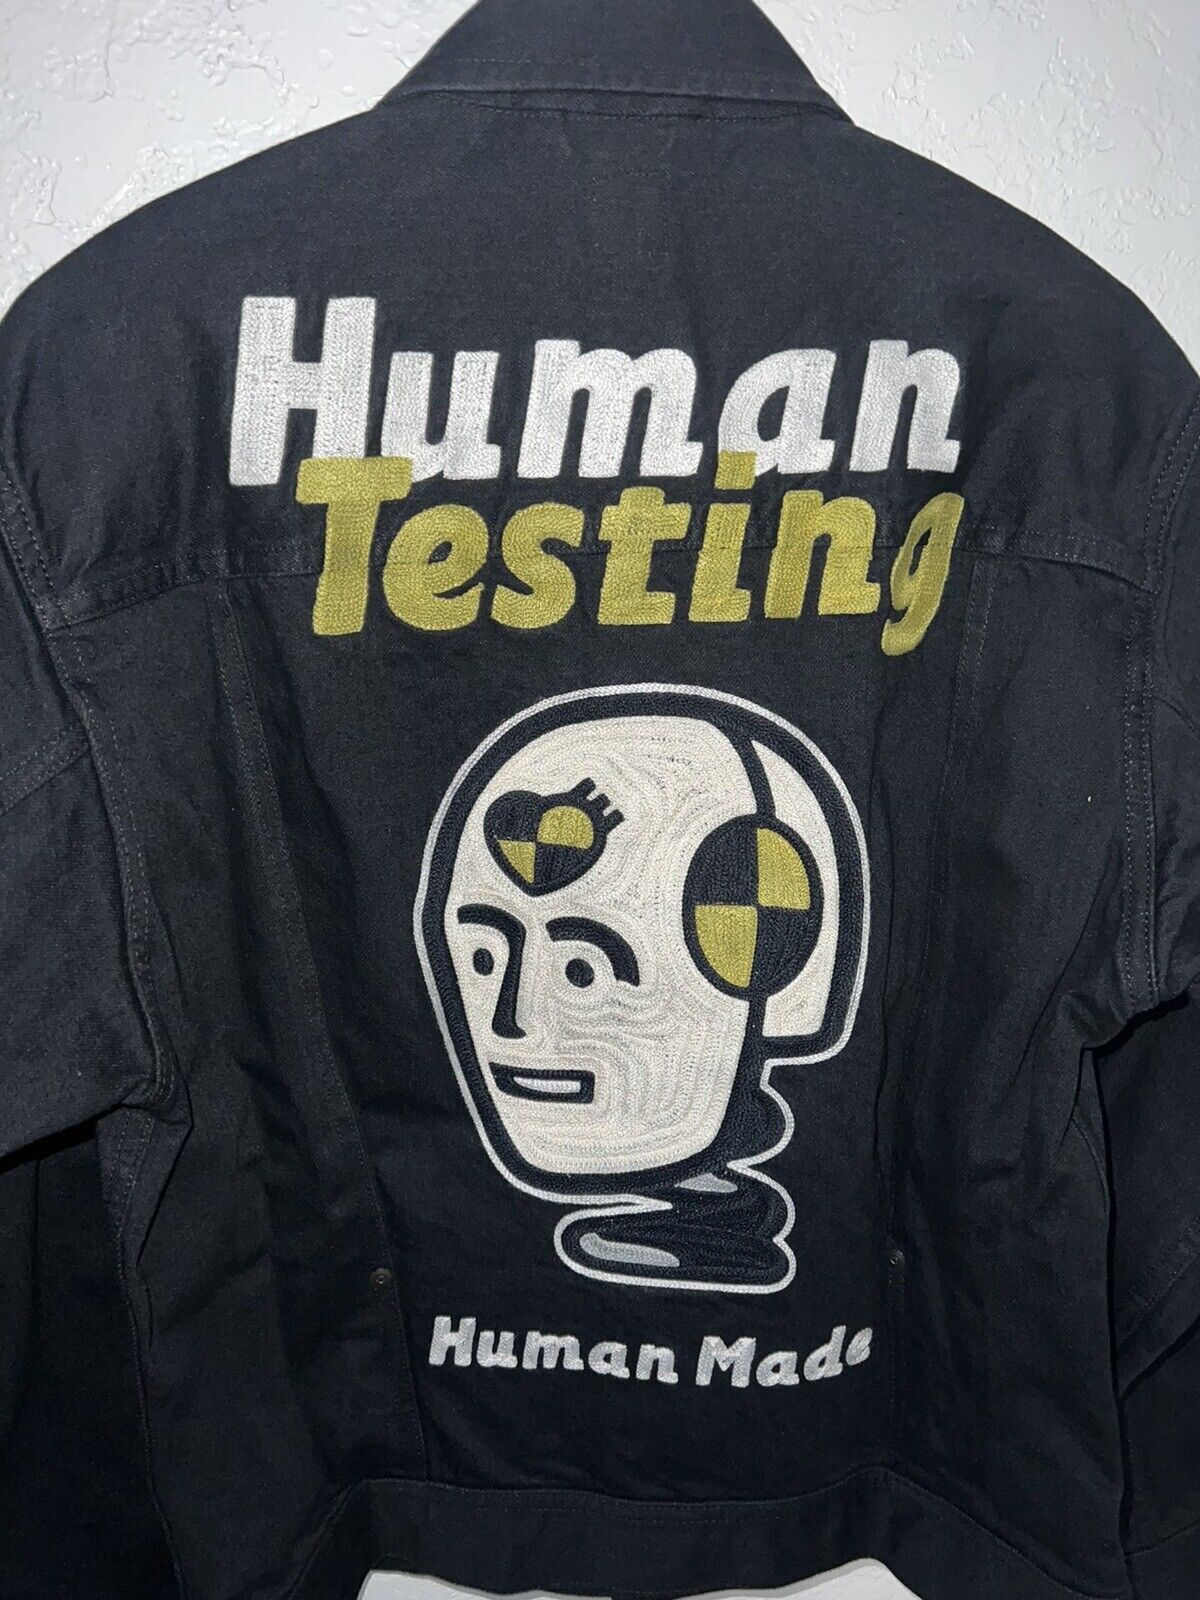 Human Made x Asap Rocky x Nigo Varsity Testing Denim Jacket size Medium New  Rare